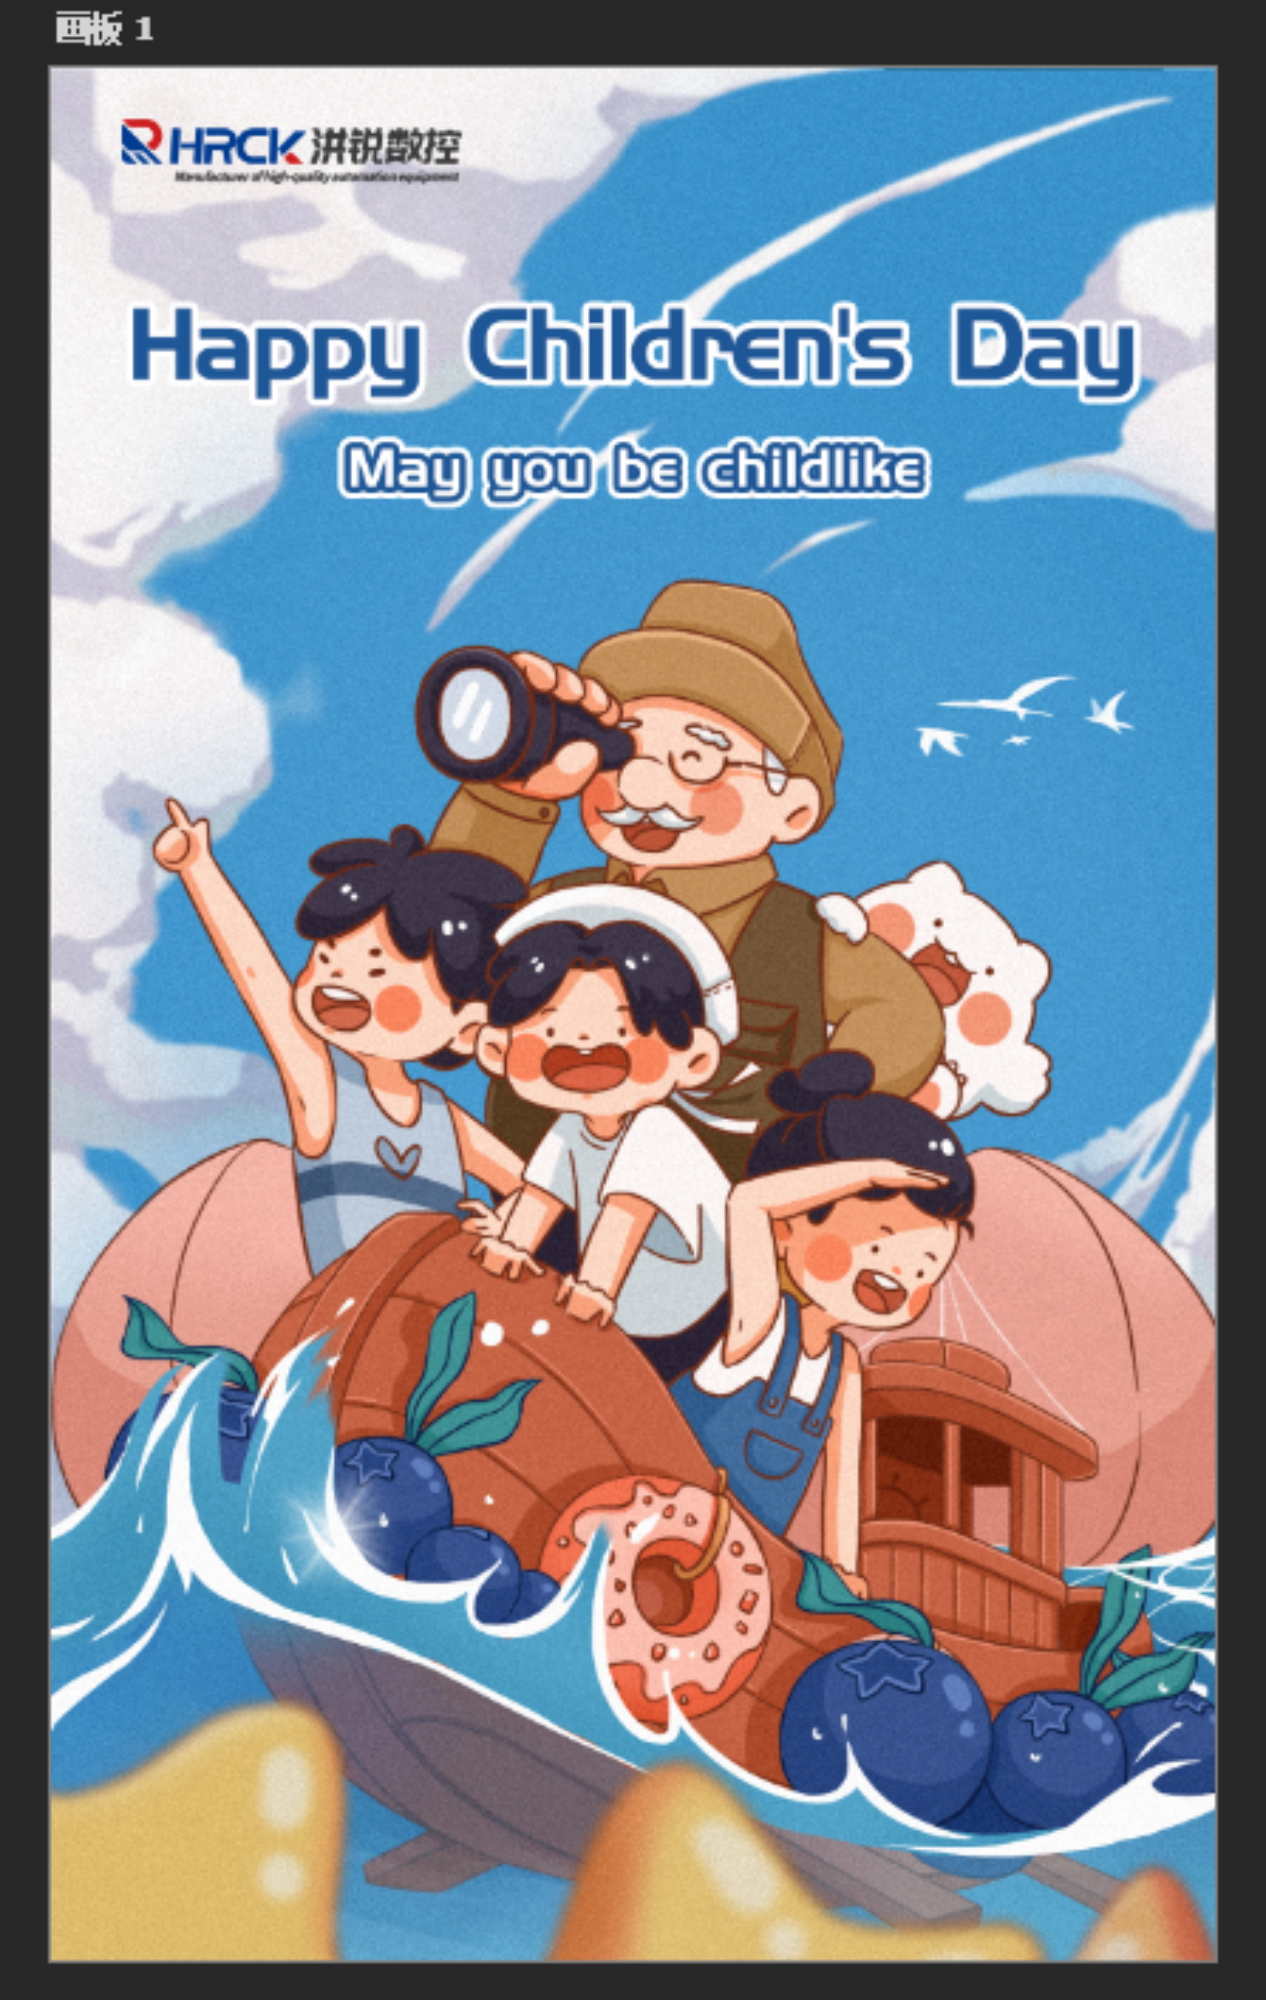 Hong Rui Machinery wishes everyone a happy Children's Day here